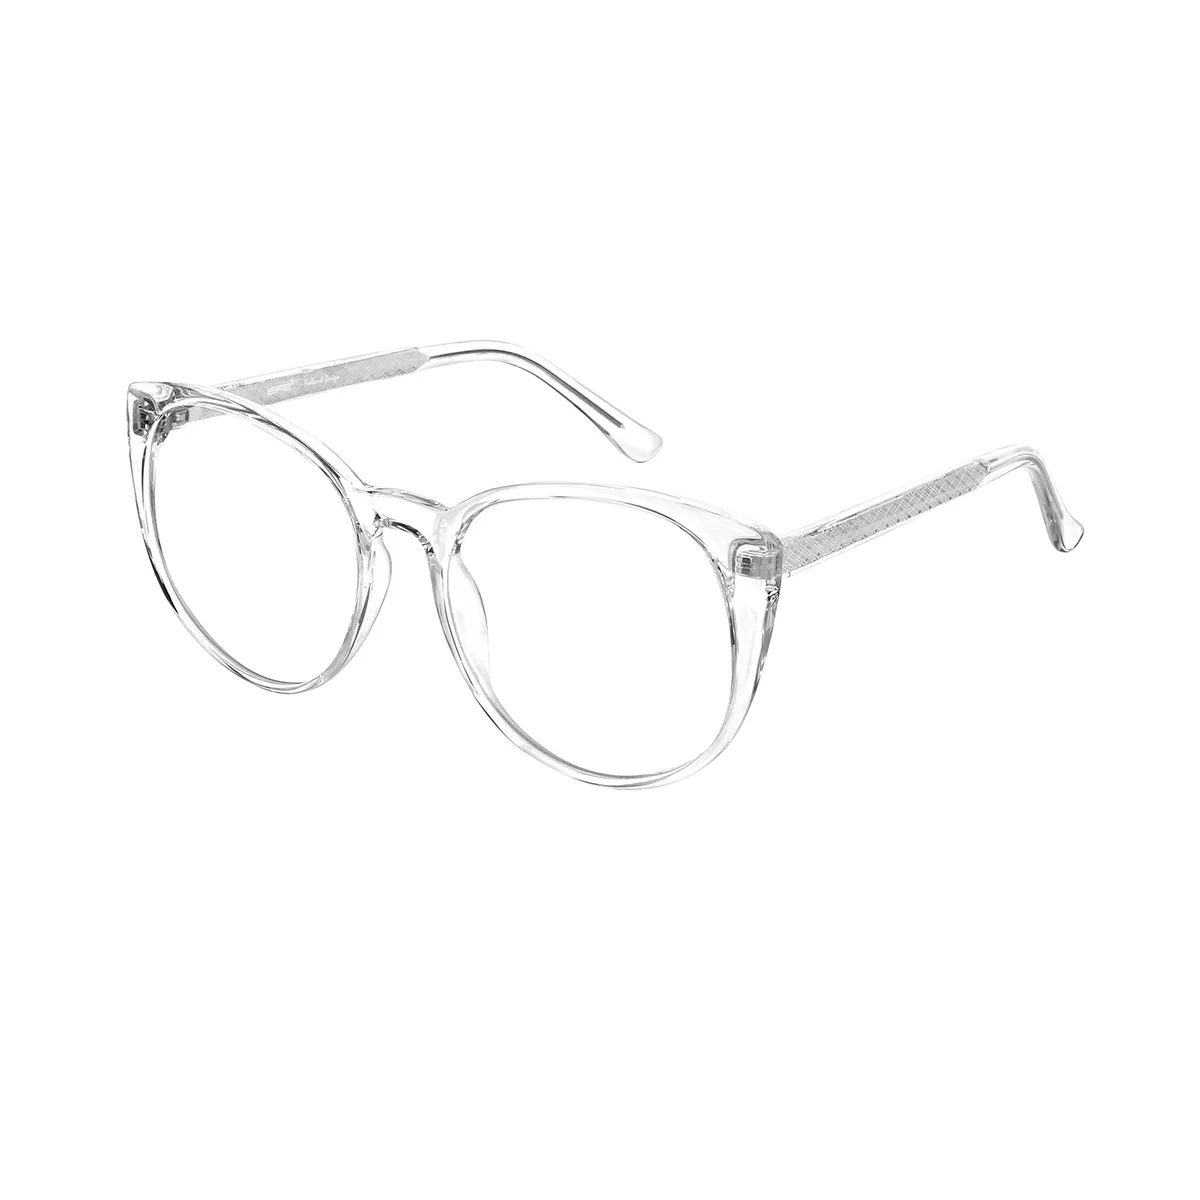 Kirsten - Oval Translucent Glasses for Women - EFE